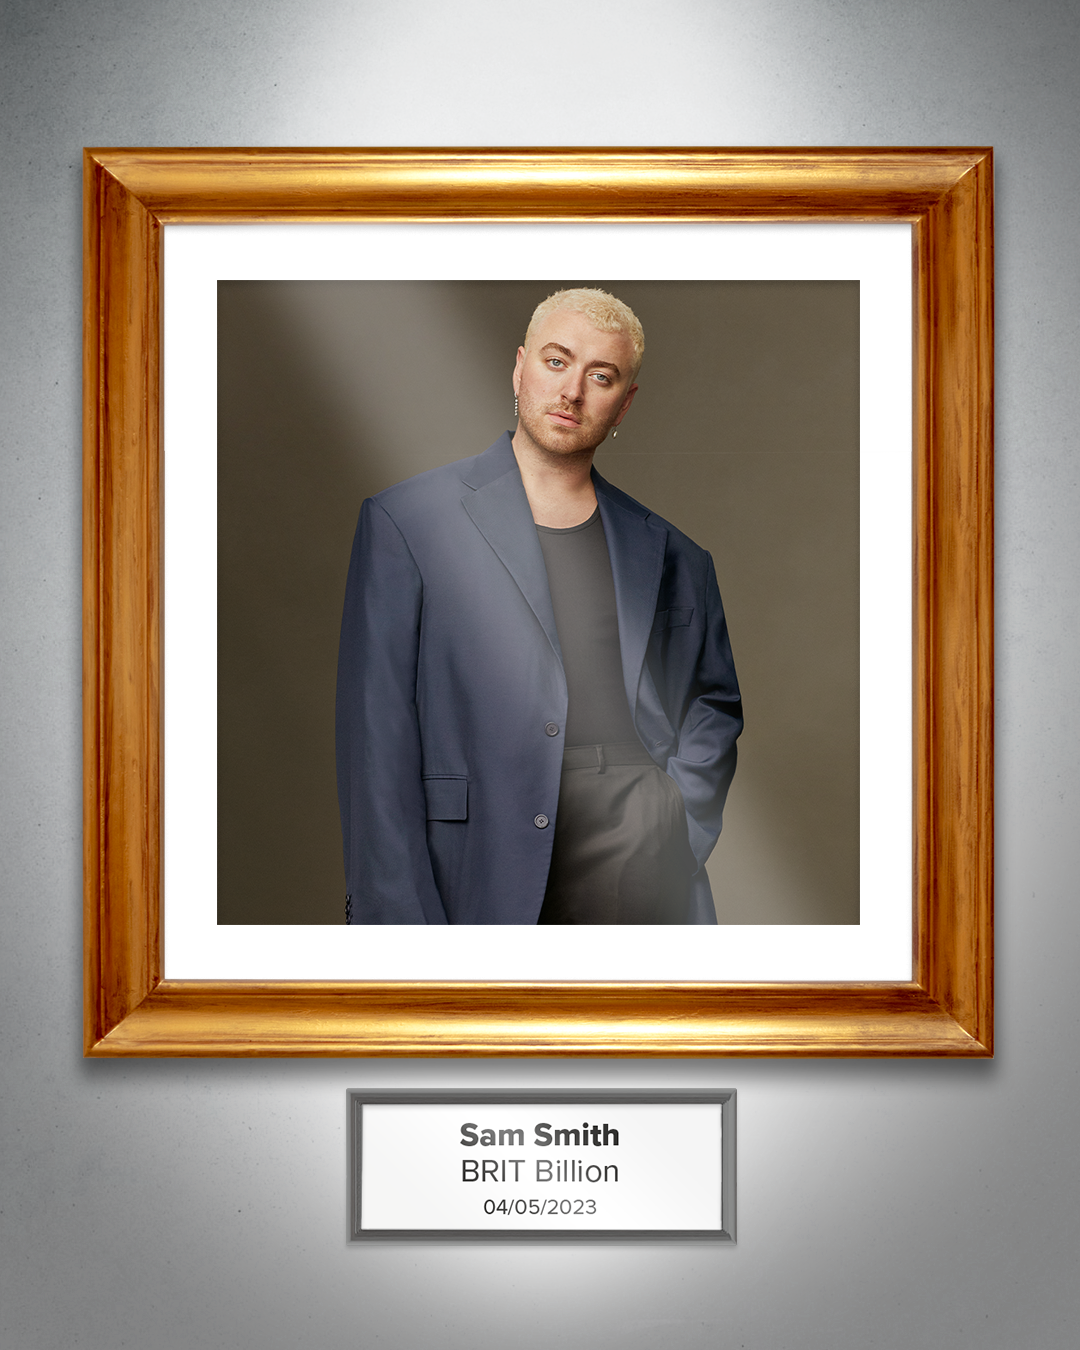 BRIT Billion: Sam Smith